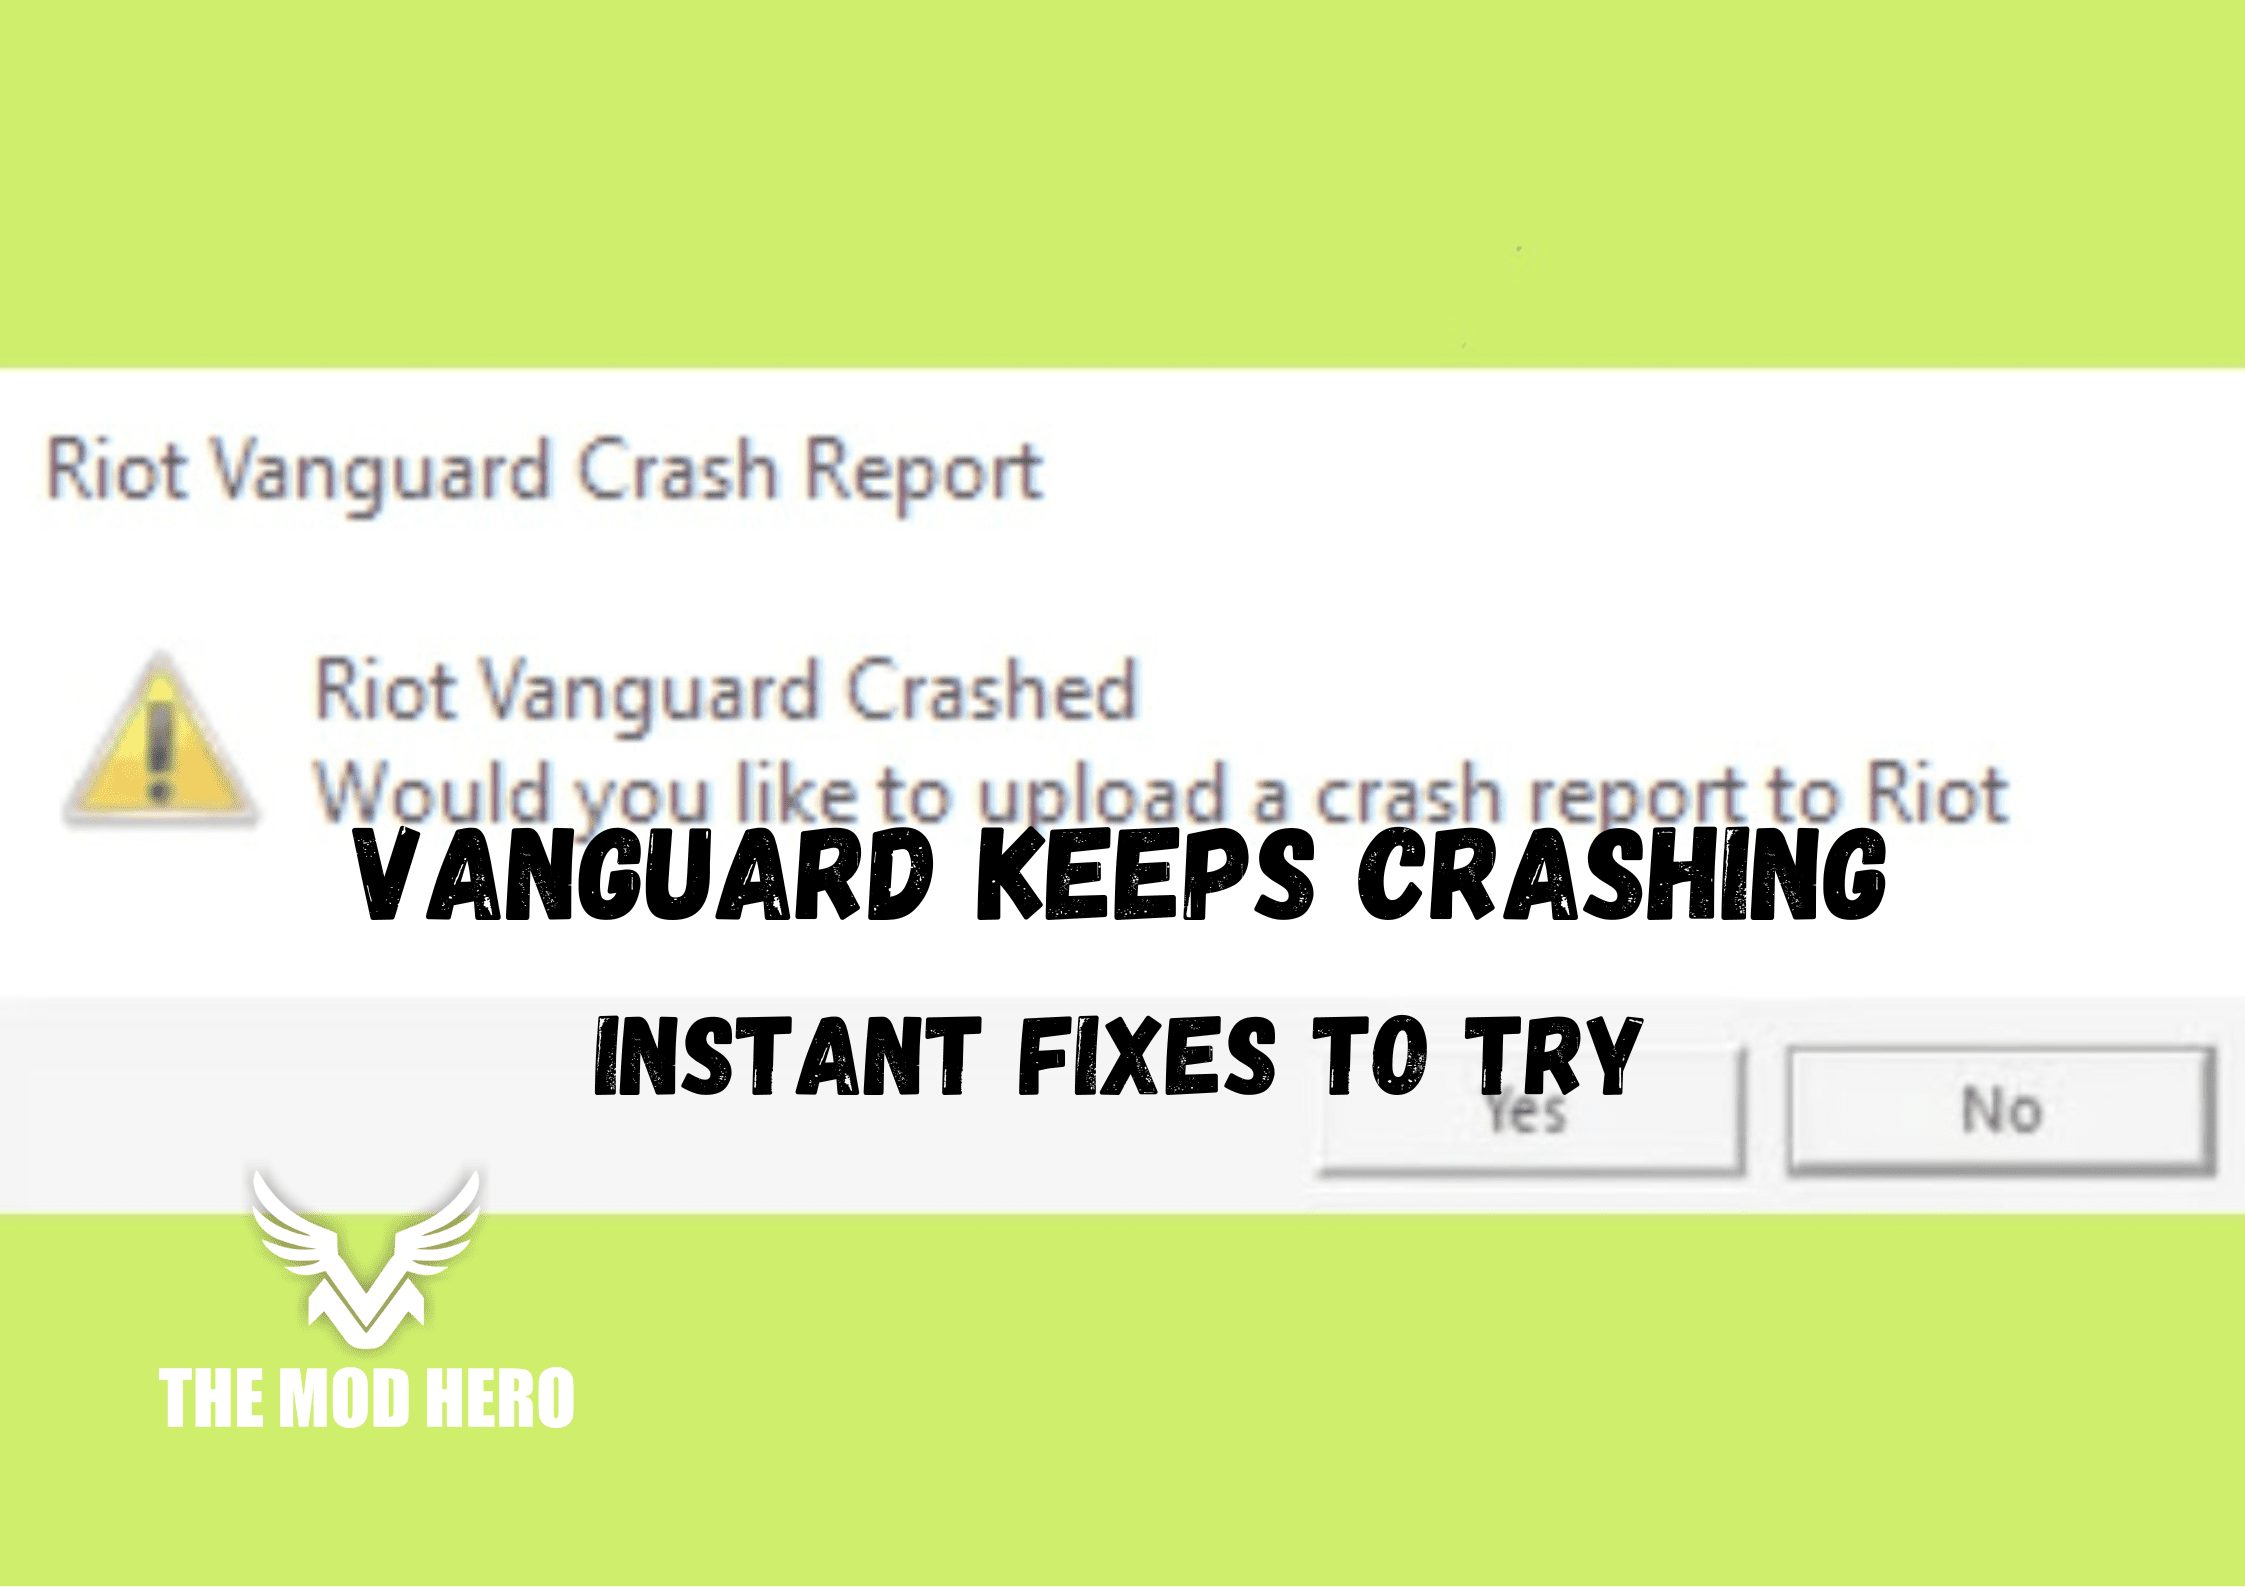 Vanguard keeps crashing